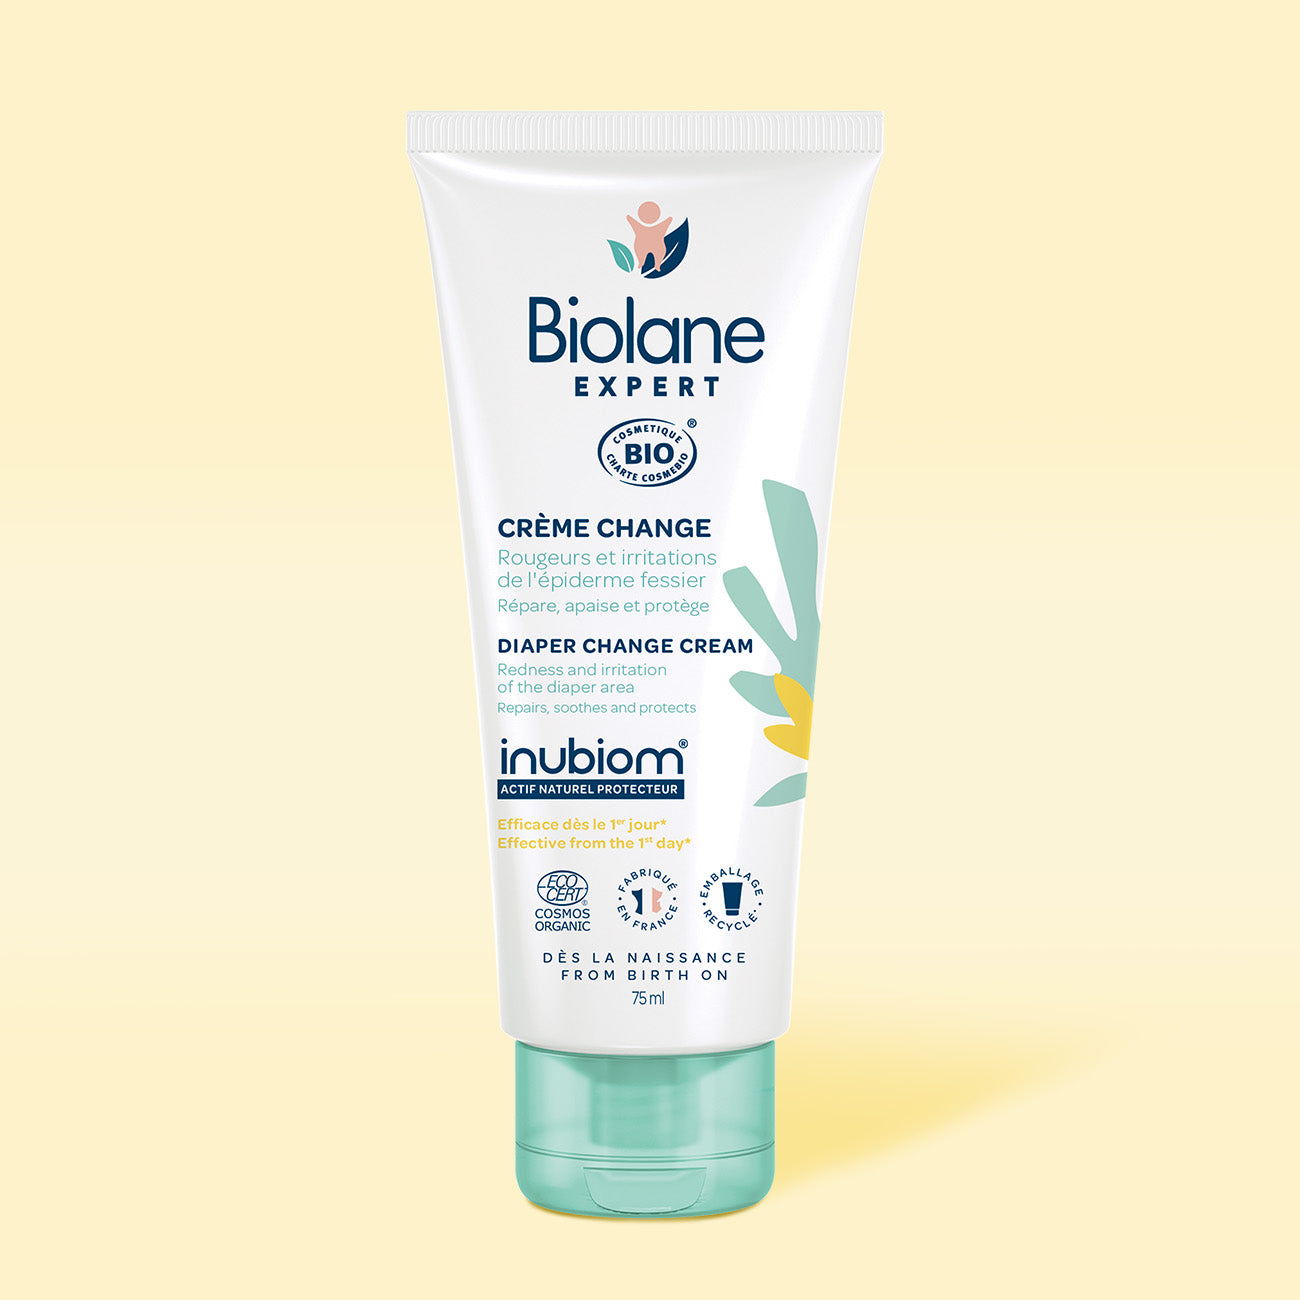 BioLane Tunisie on Instagram: La crème change Biolane protège l